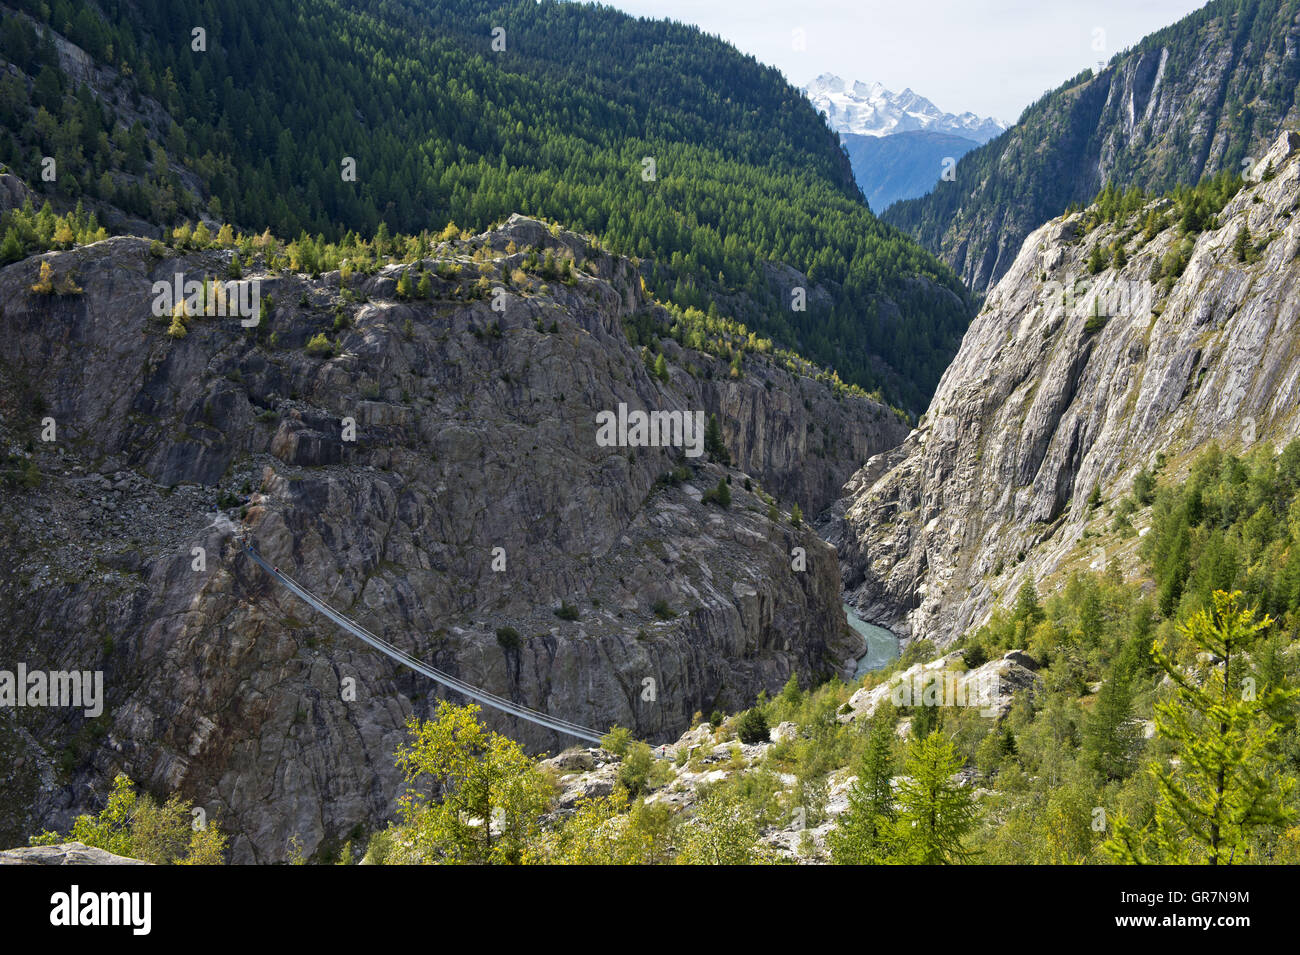 Span Ribbon ponte che attraversa il Canyon Massaschlucht,Turismo Regione Belalp, Vallese, Svizzera Foto Stock